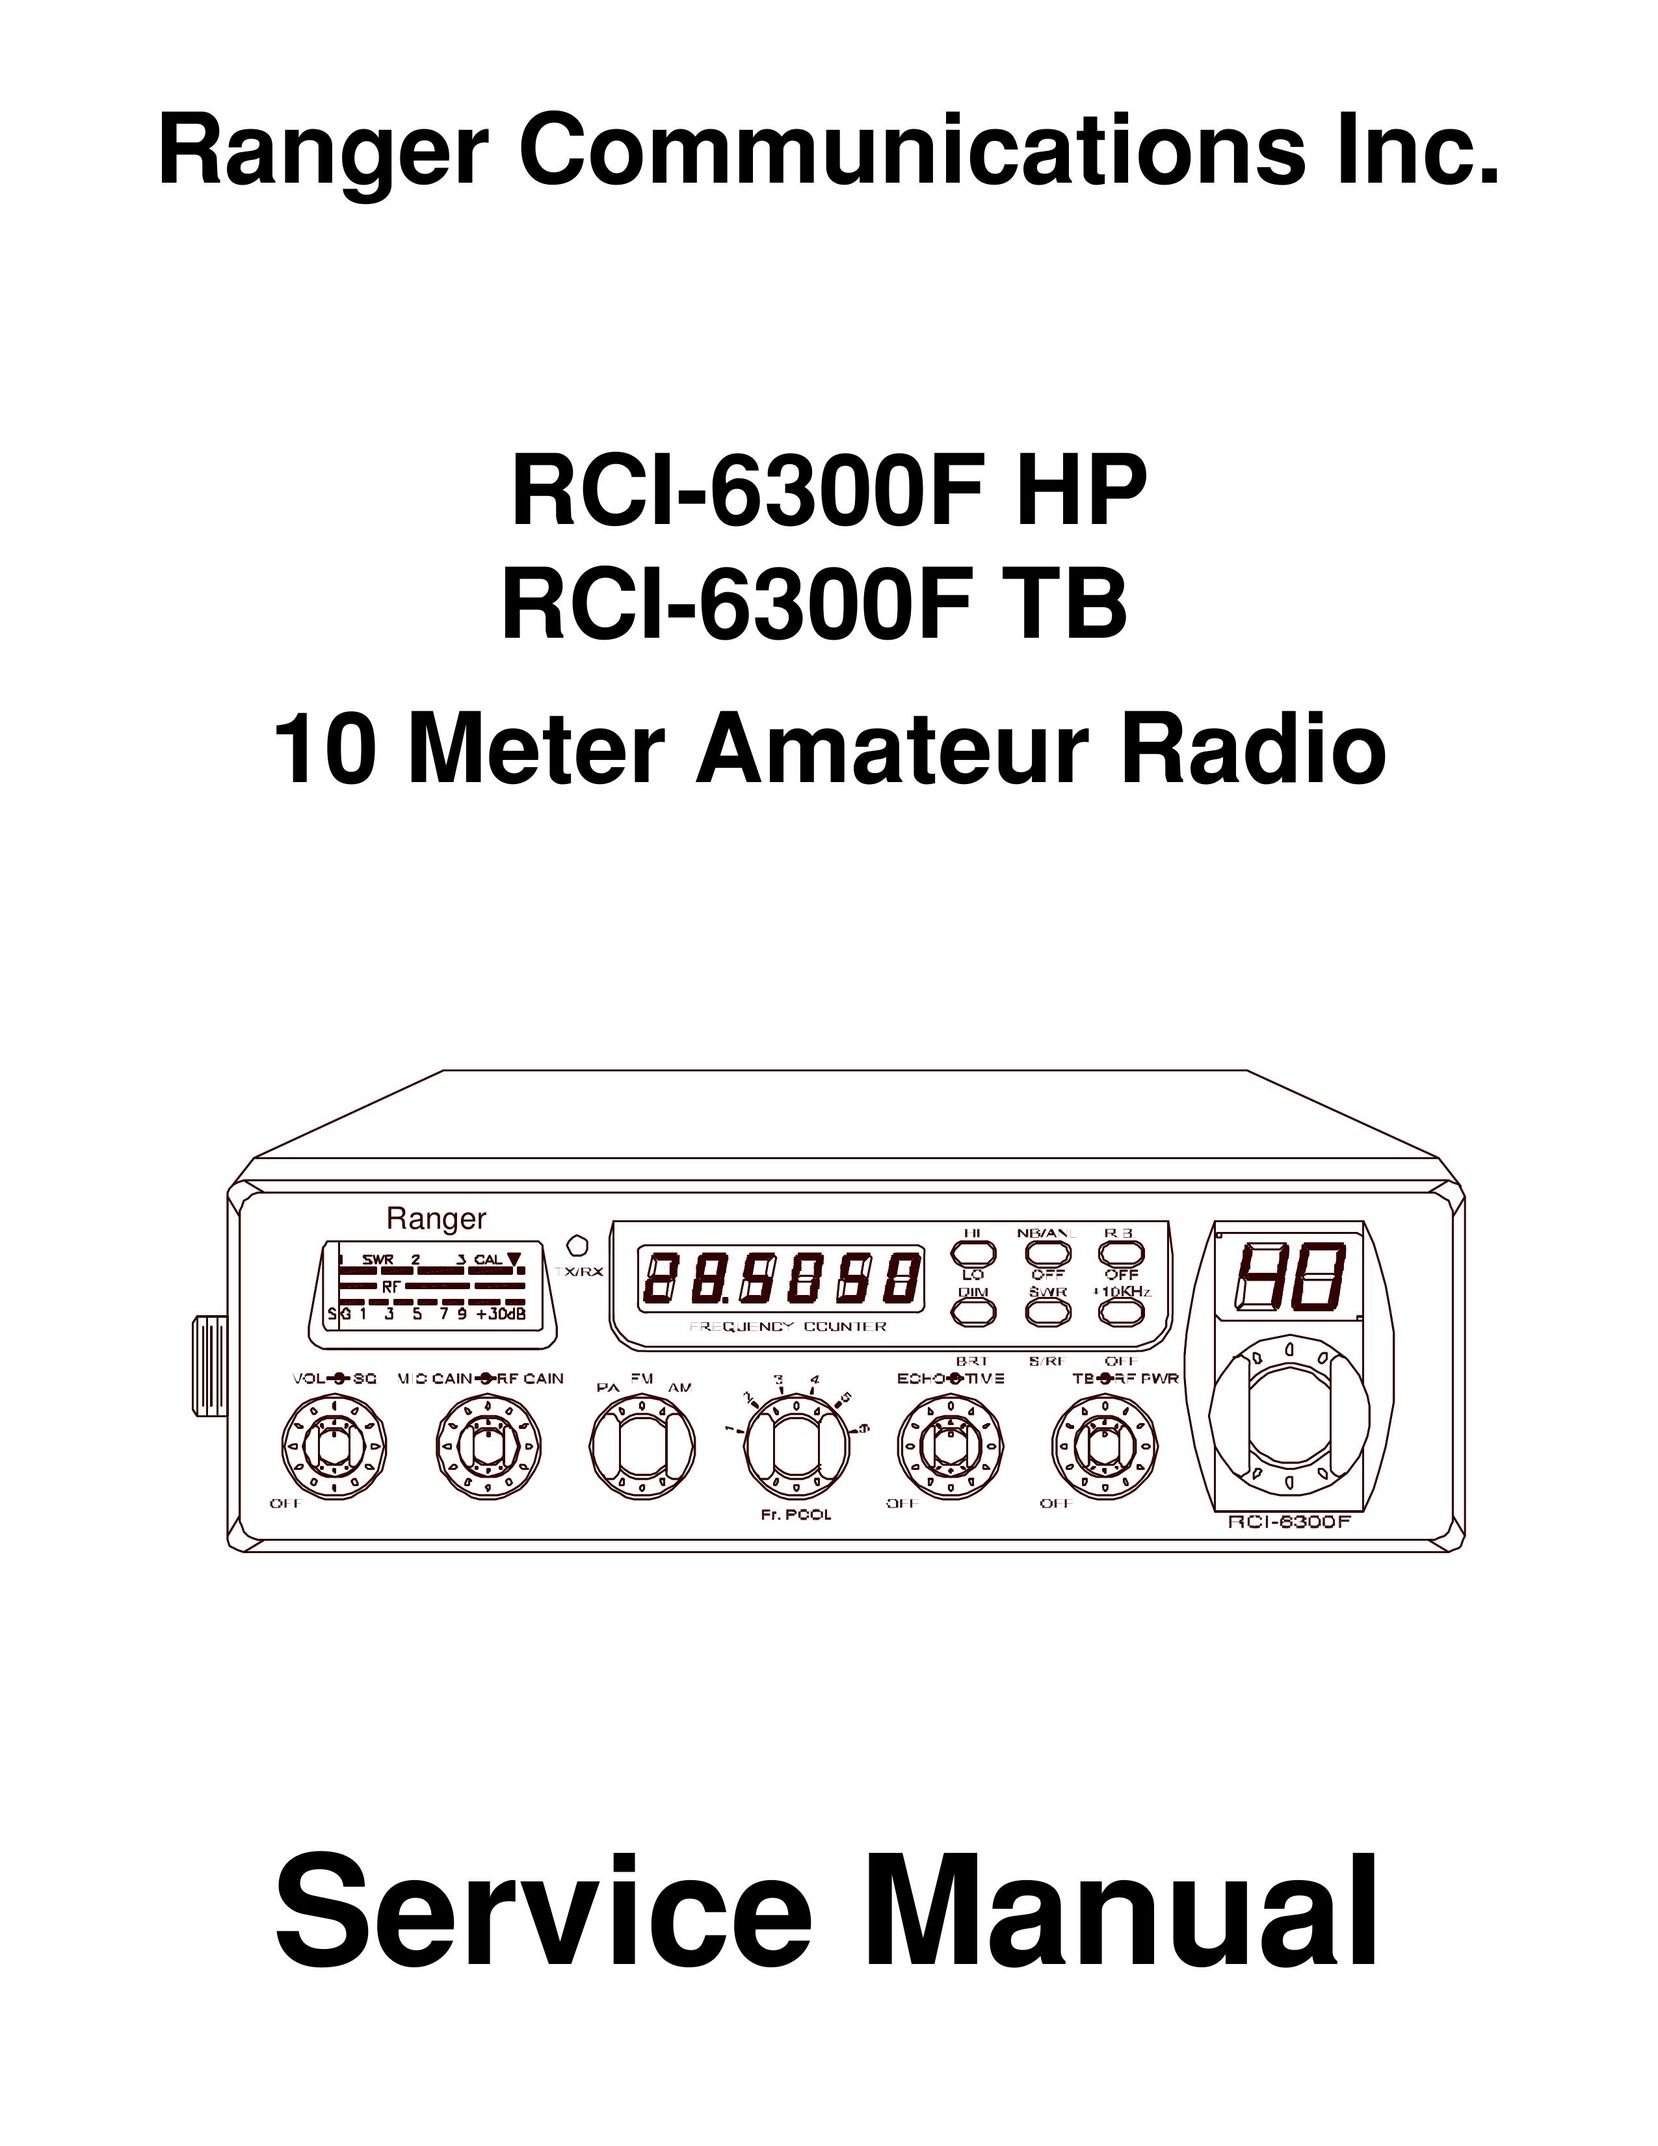 Ranger RCI-6300F HP Radio User Manual